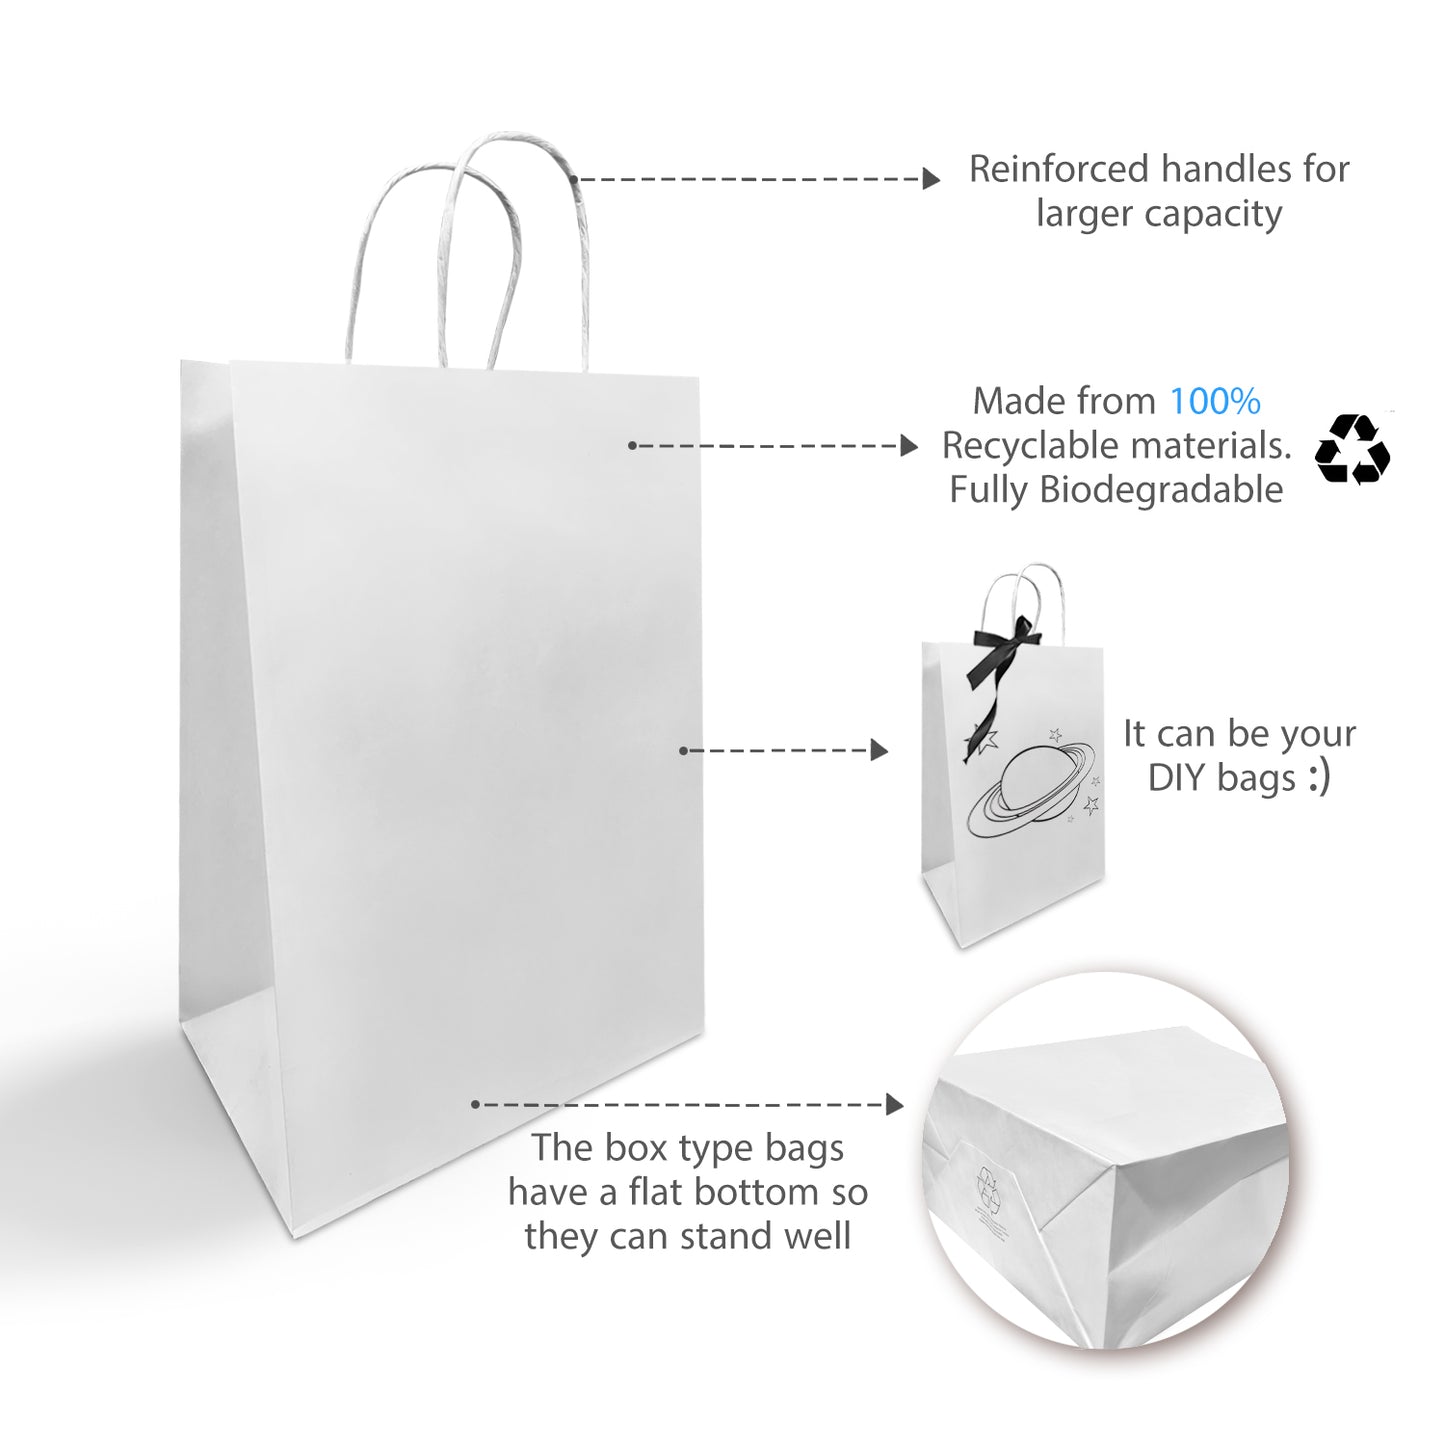 Bottle 9x5.75x13.5 White Paper Bags Twisted Handles; $0.39/pc, 200pcs/case, sold by case